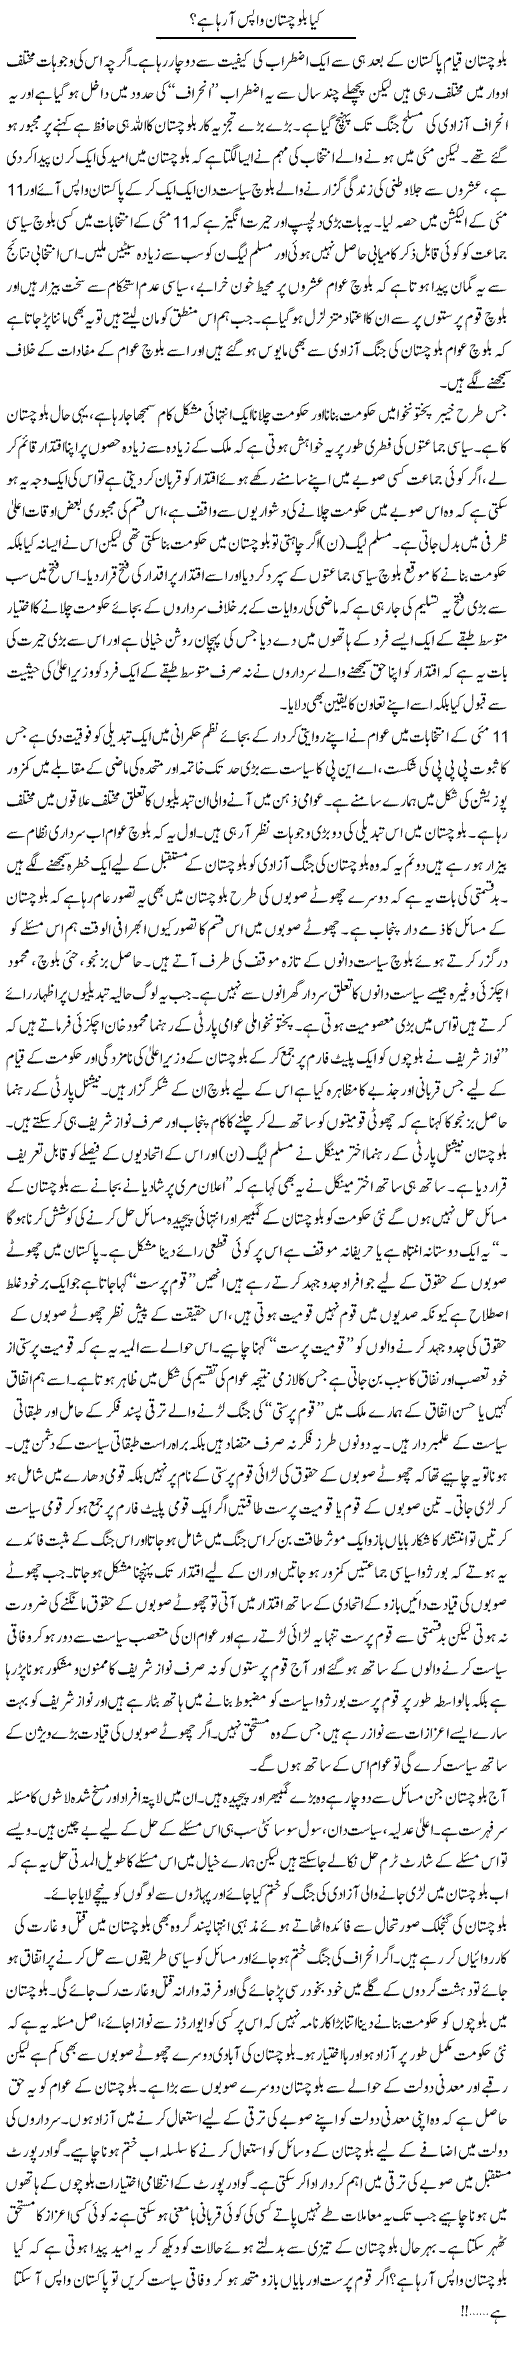 Kia Balochistan Wapis A Raha Hai | Zahir Akhter Bedi | Daily Urdu Columns